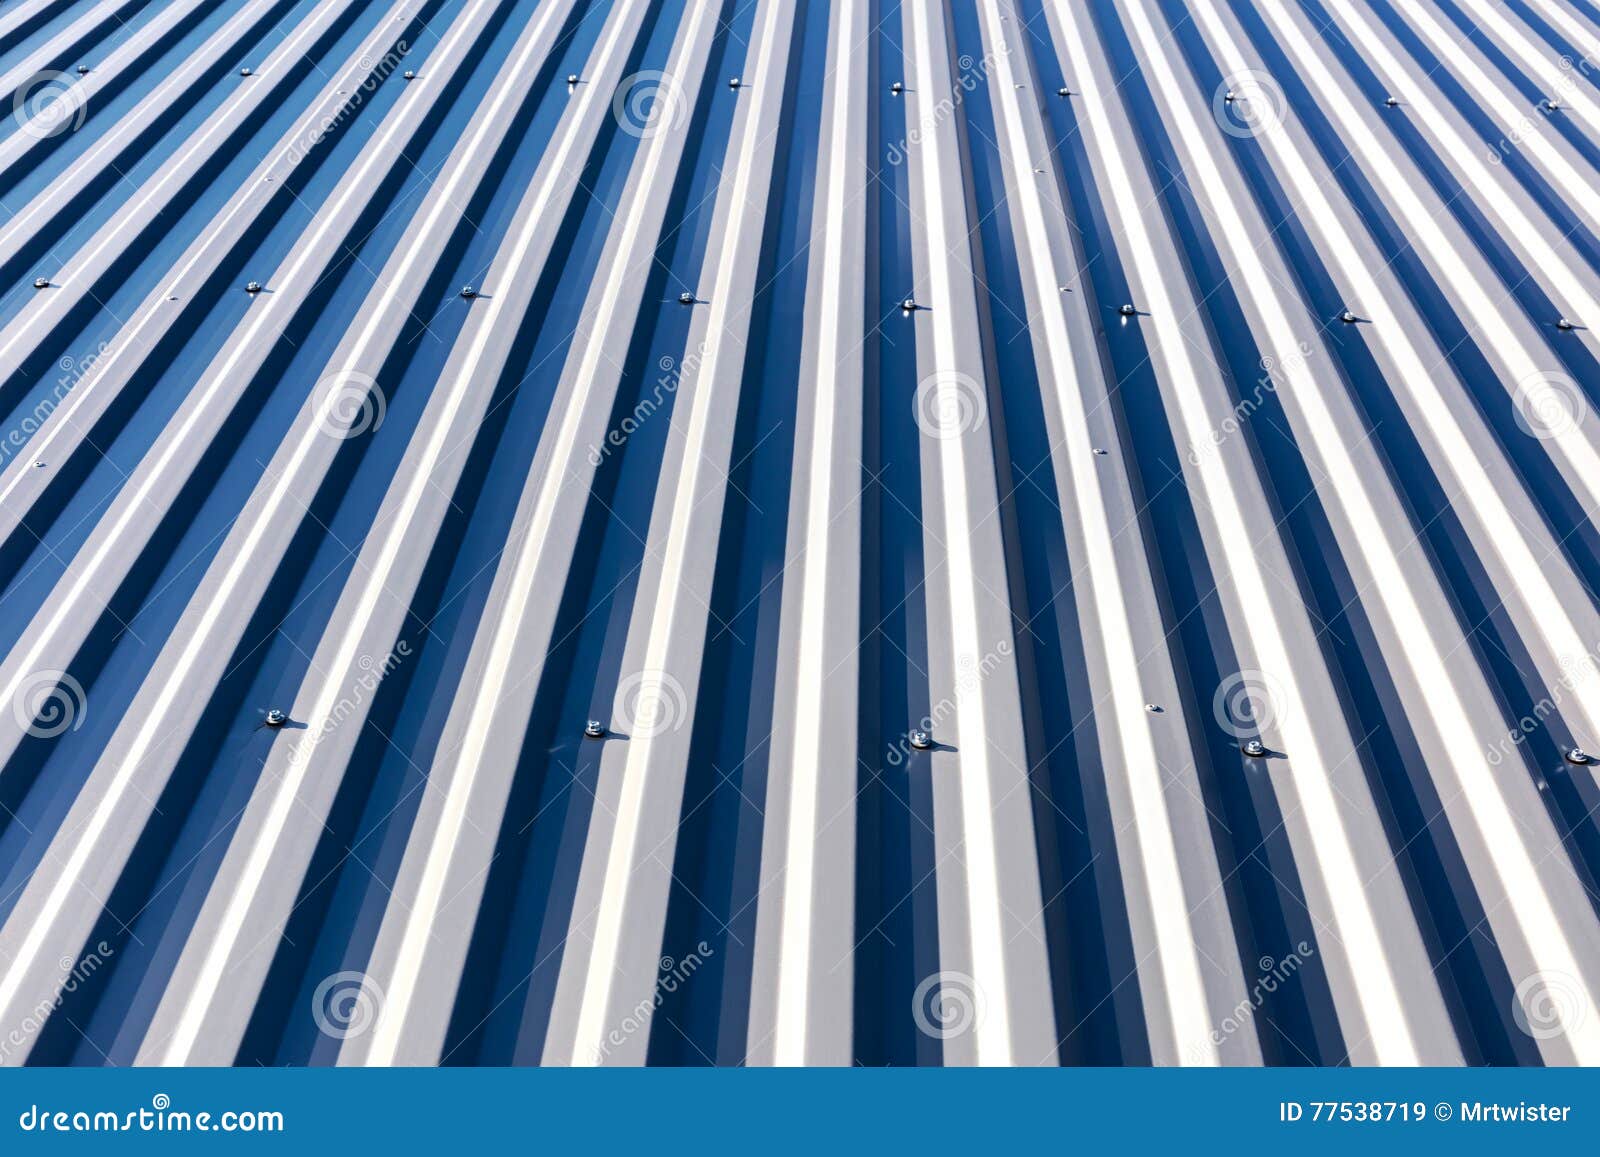 Galvanized Metal Steel Roof Under Direct Sunlight Stock Image - Image ...